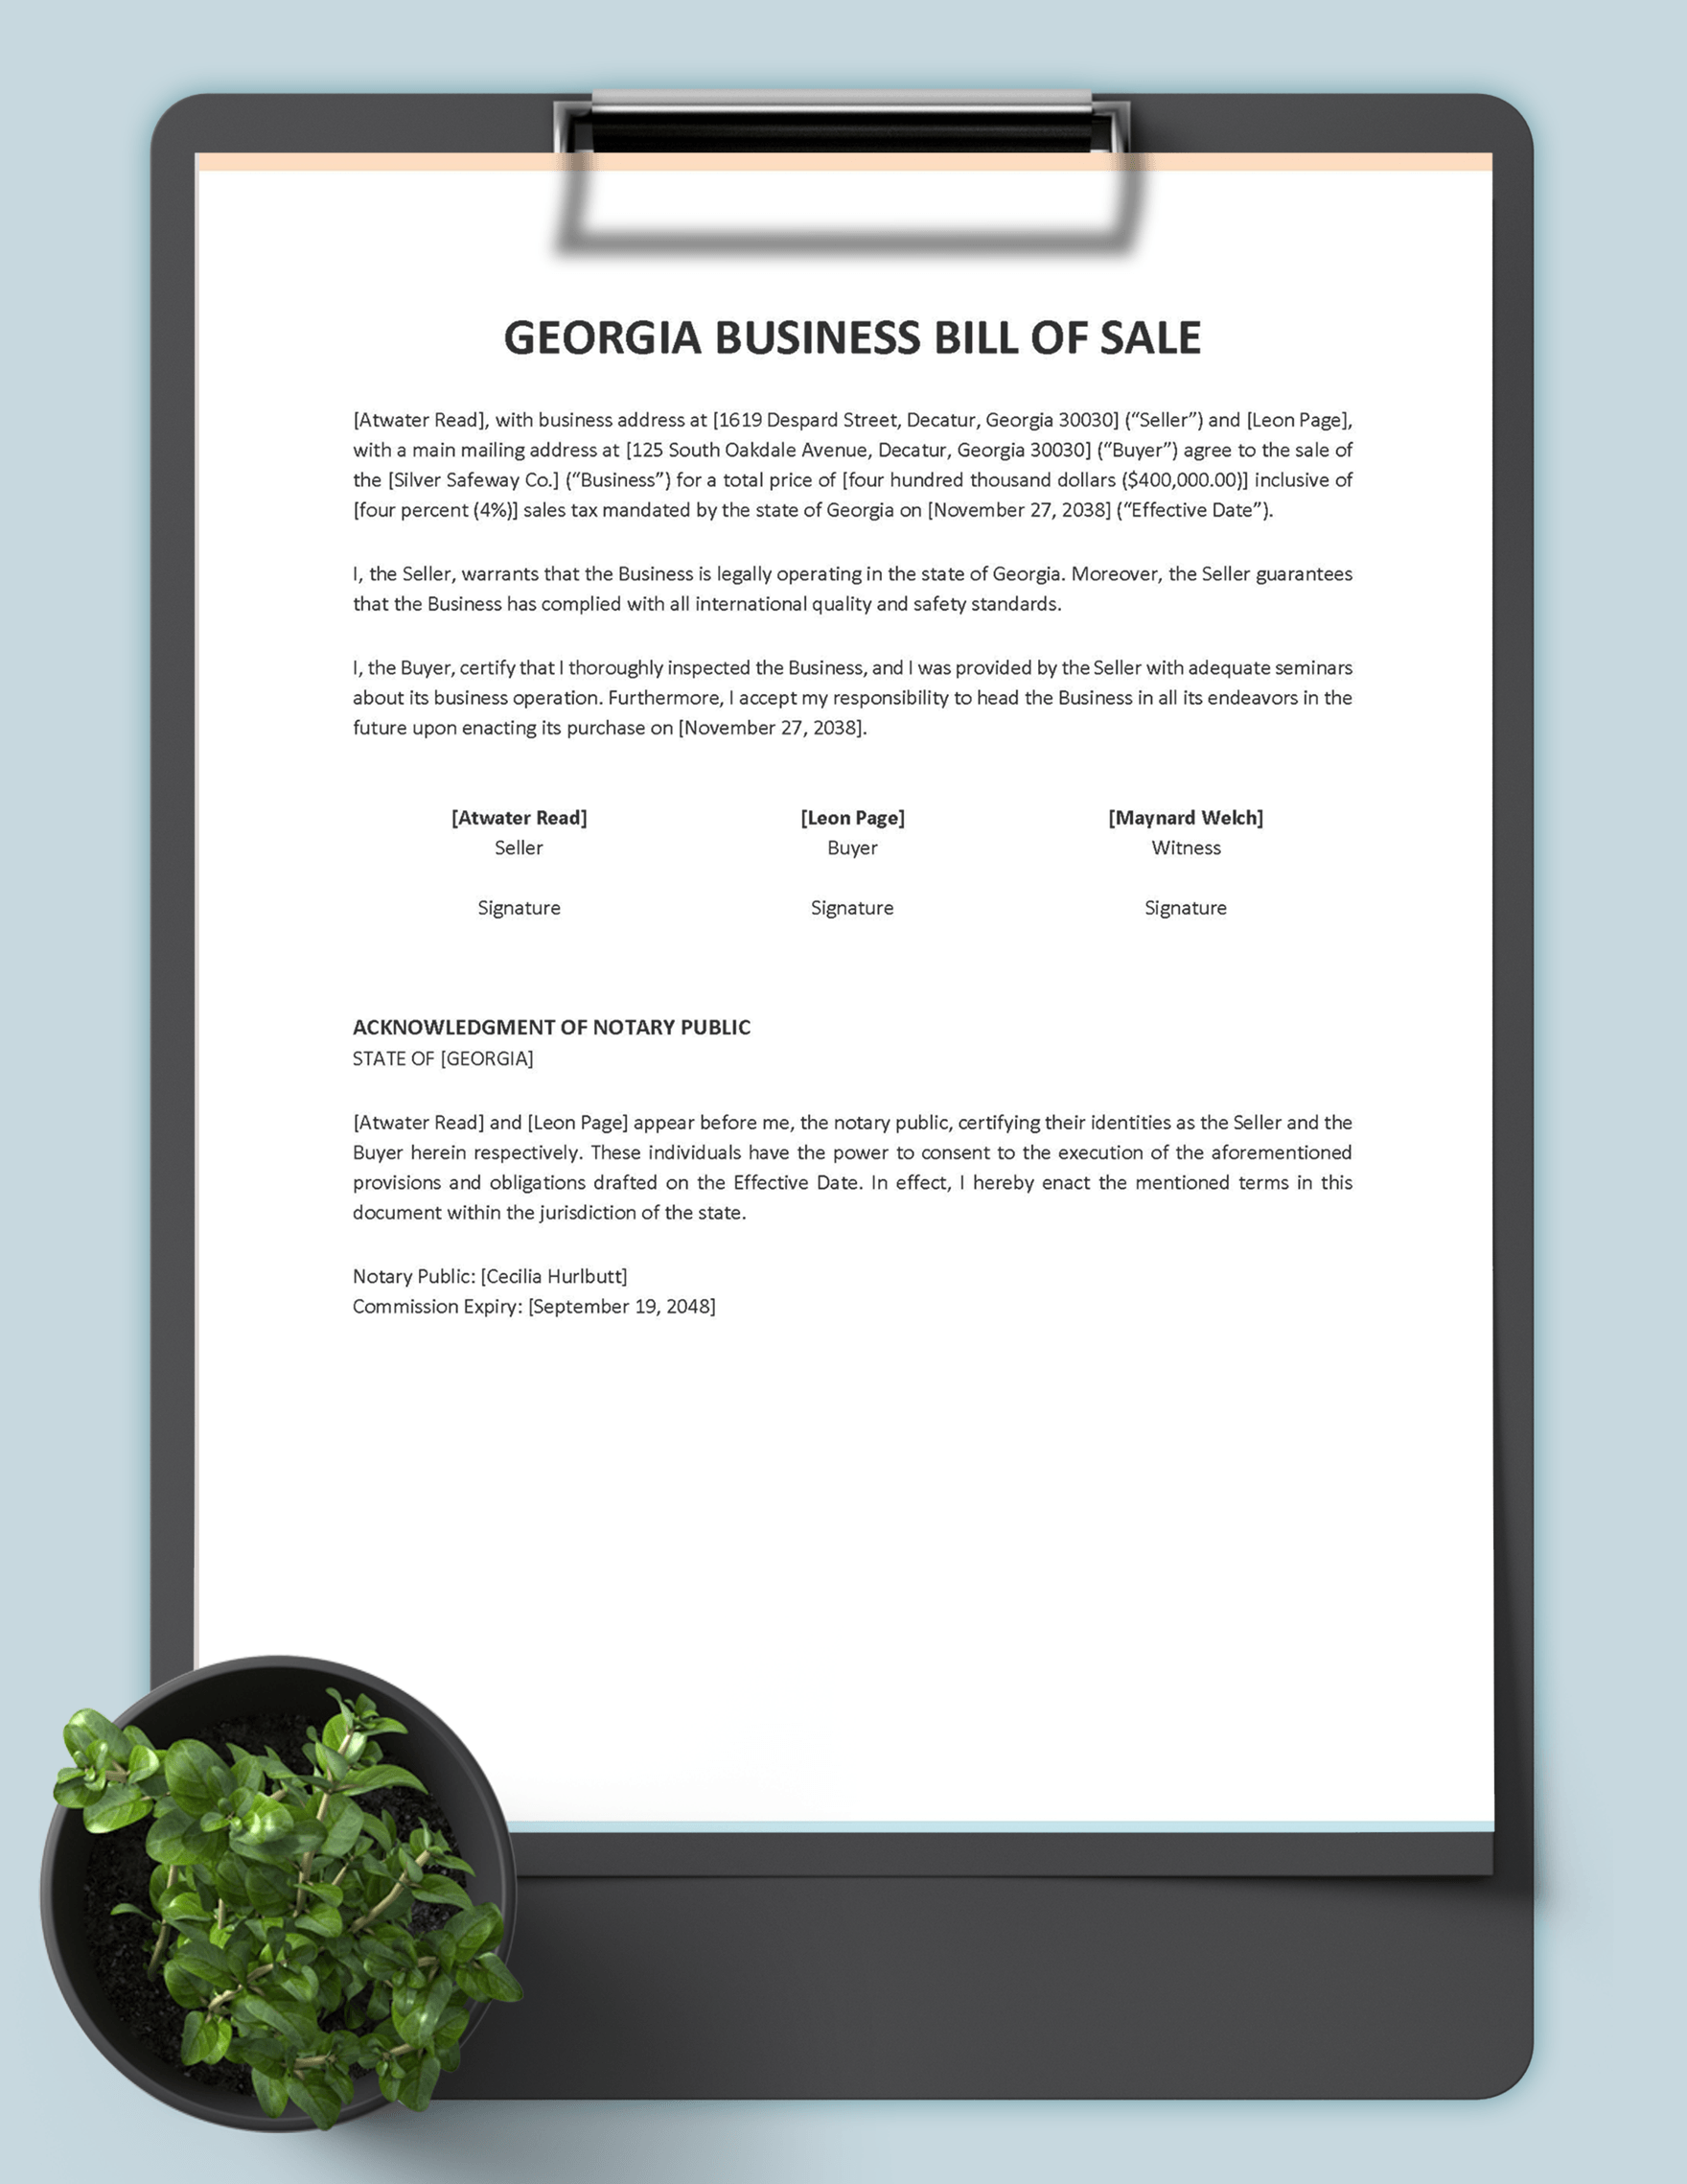 Georgia Business Bill of Sale Template